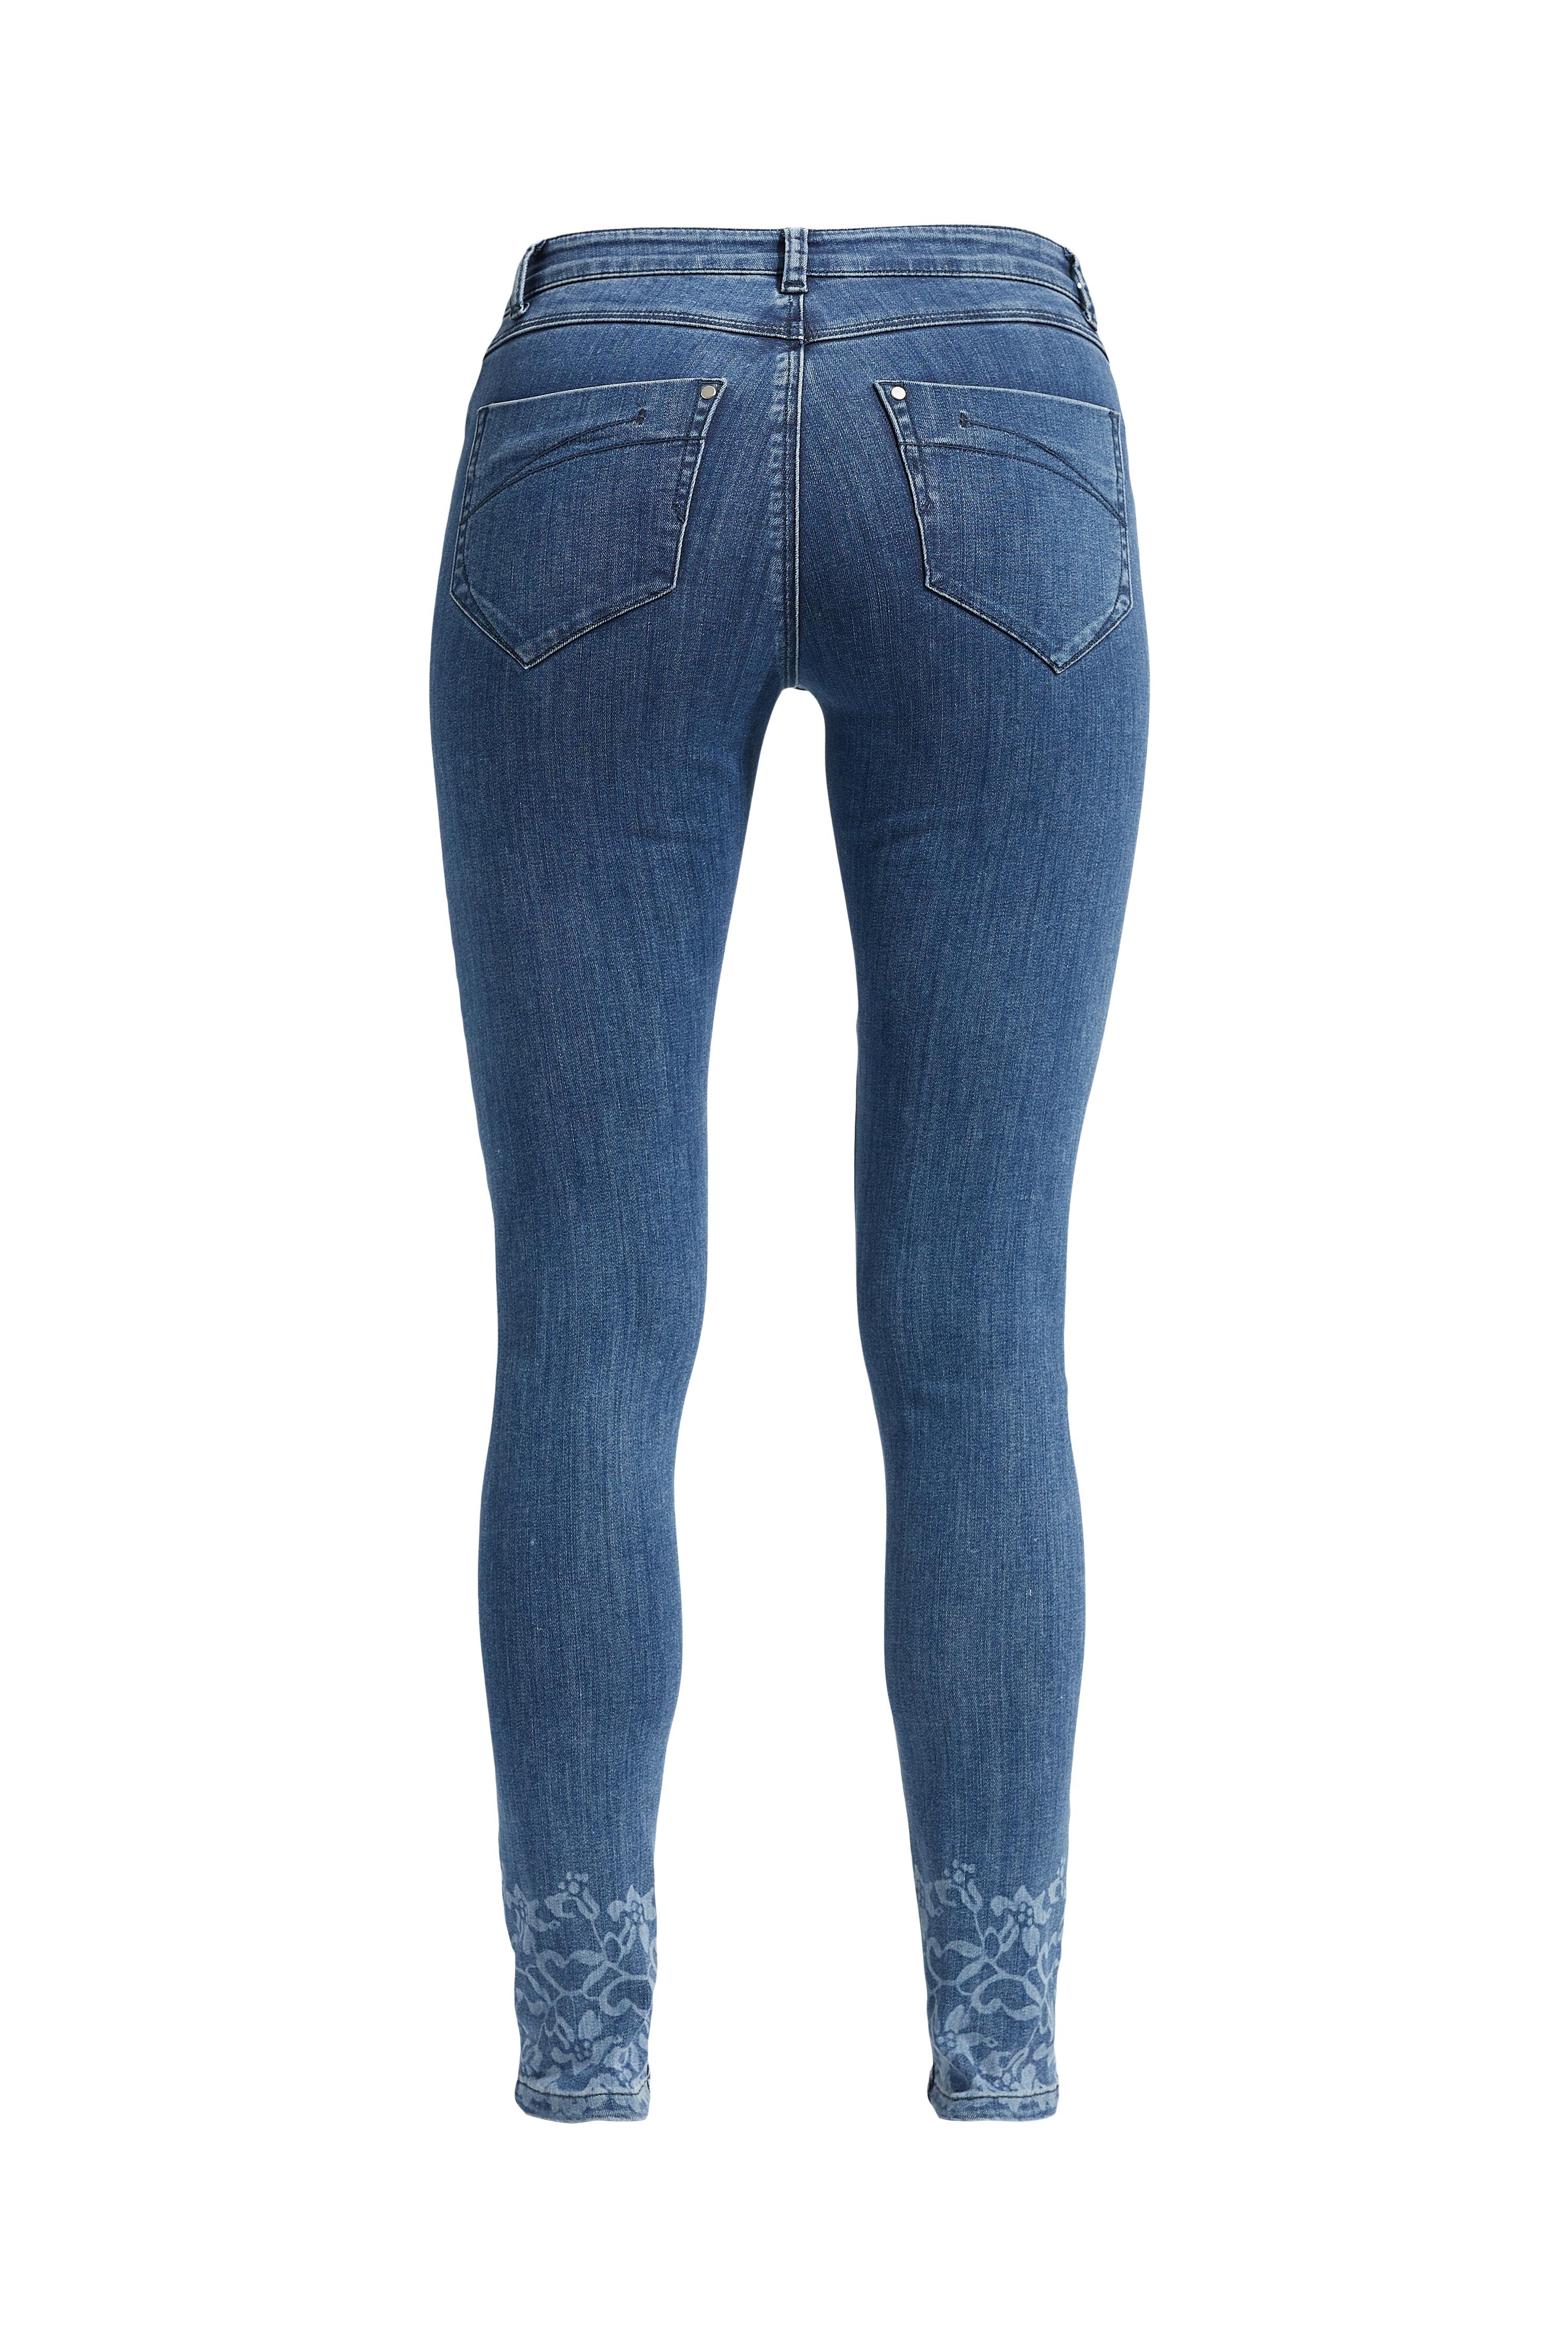 LAURIE Olivia Lazer Skinny - Short Length Trousers SKINNY 45504 Medium Blue Denim